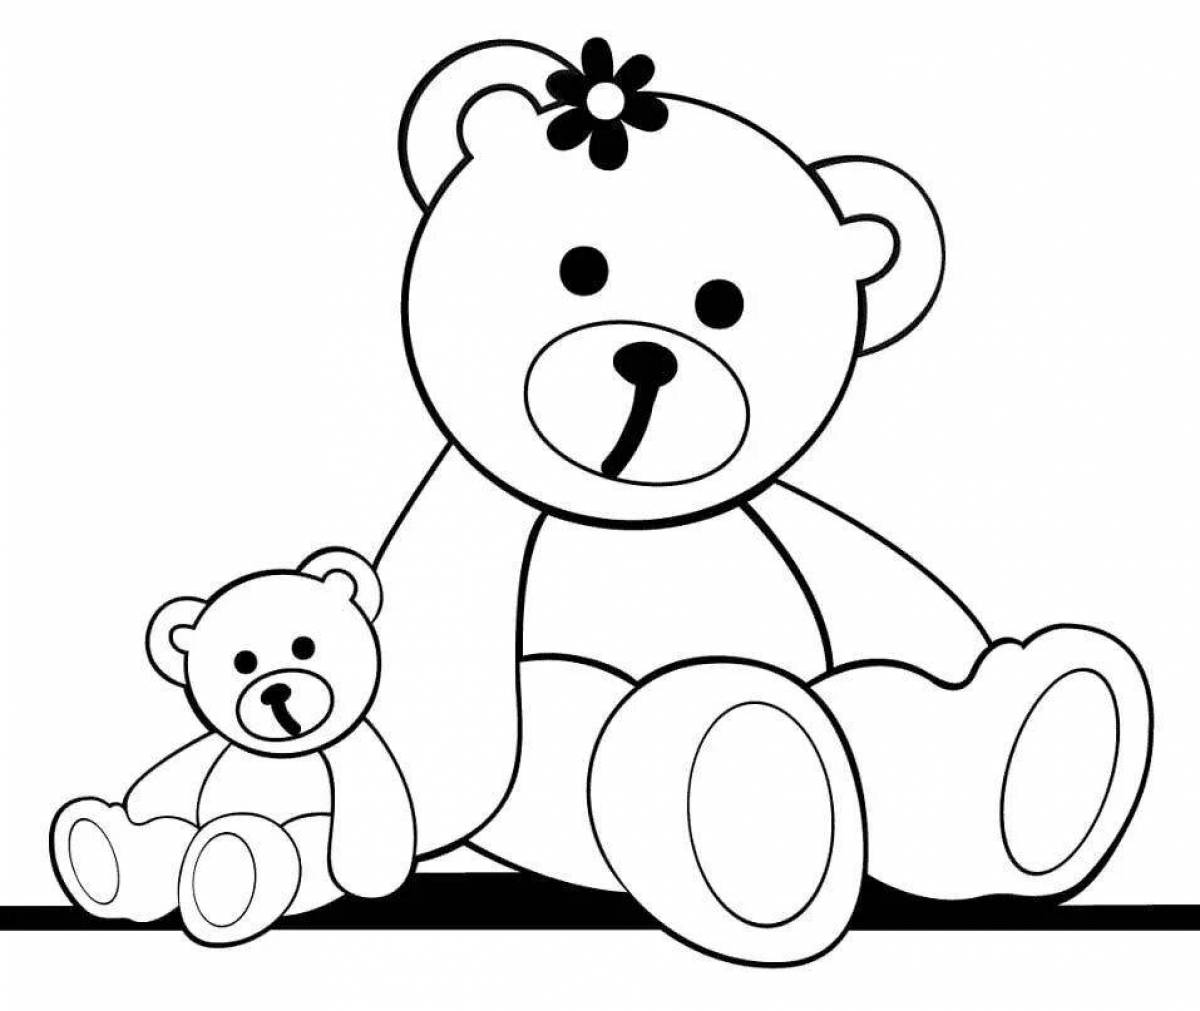 Coloring cuddled teddy bear